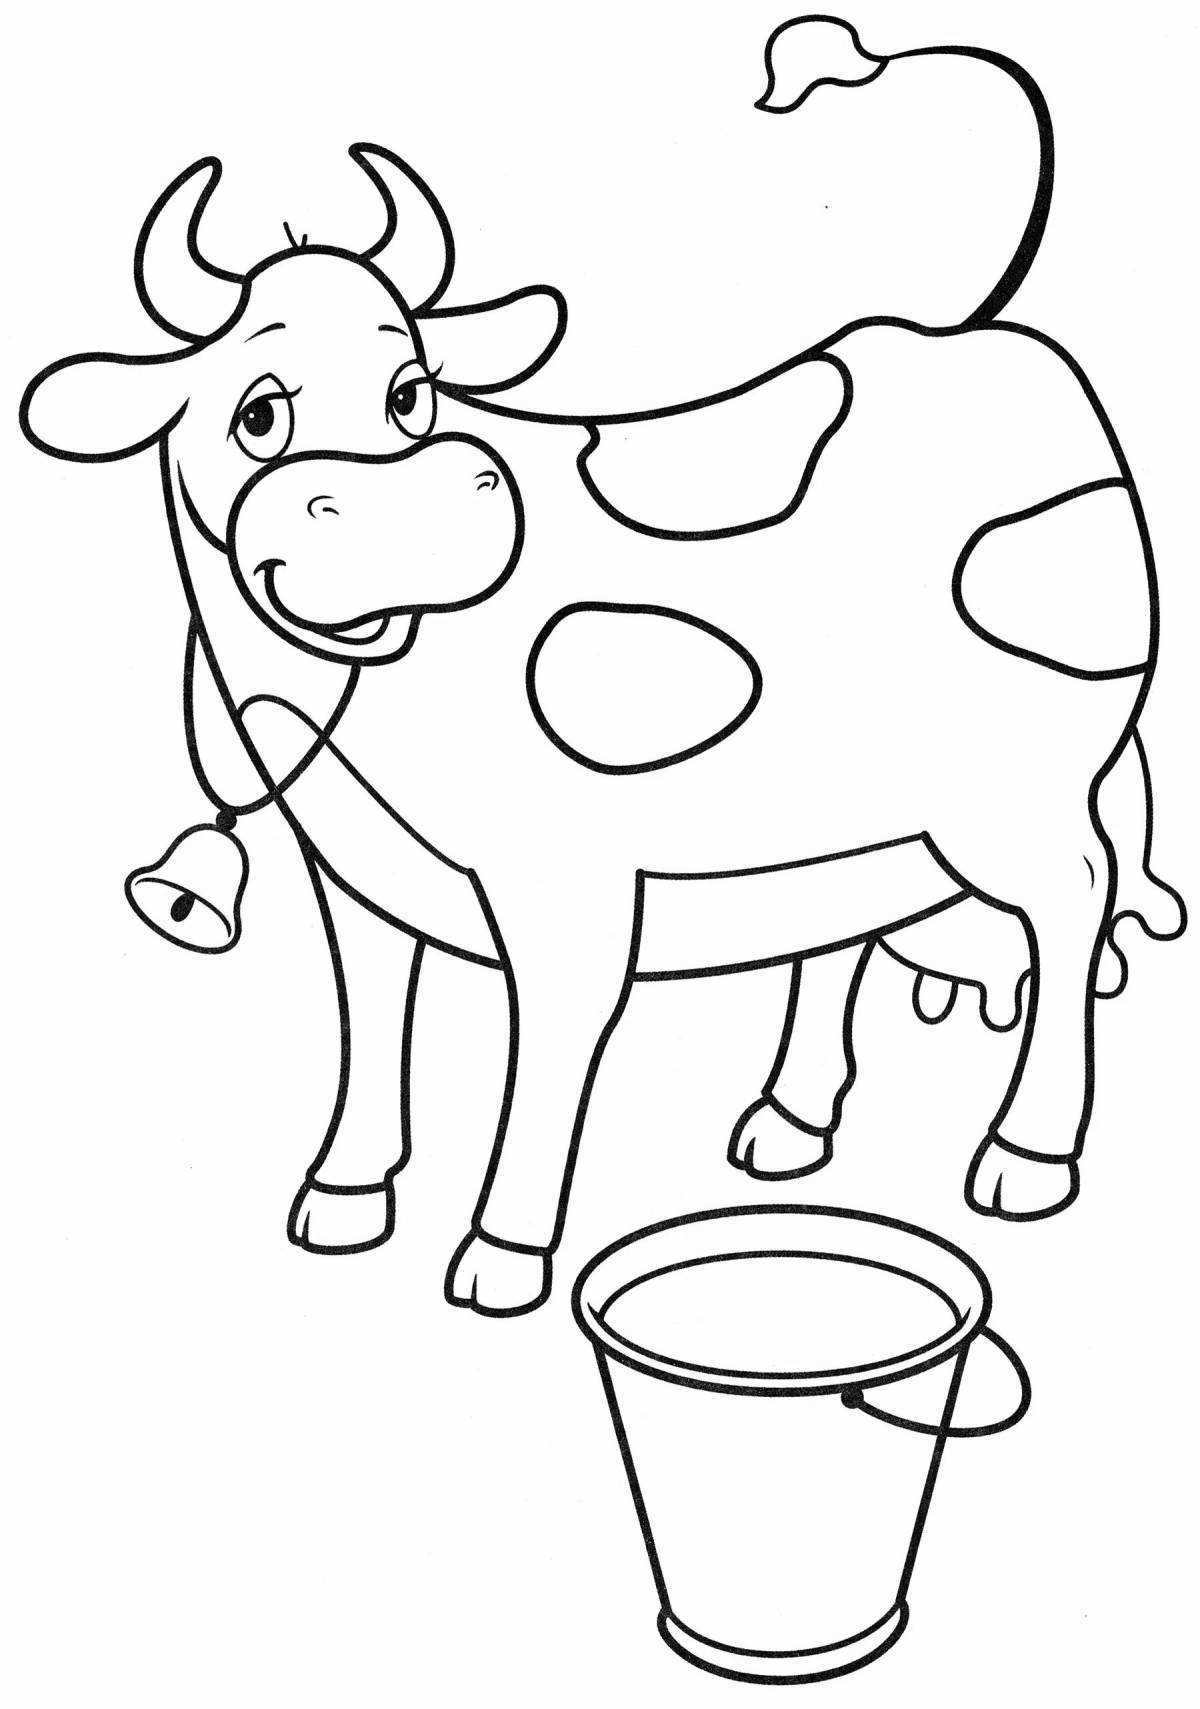 Joyful cow drawing for kids